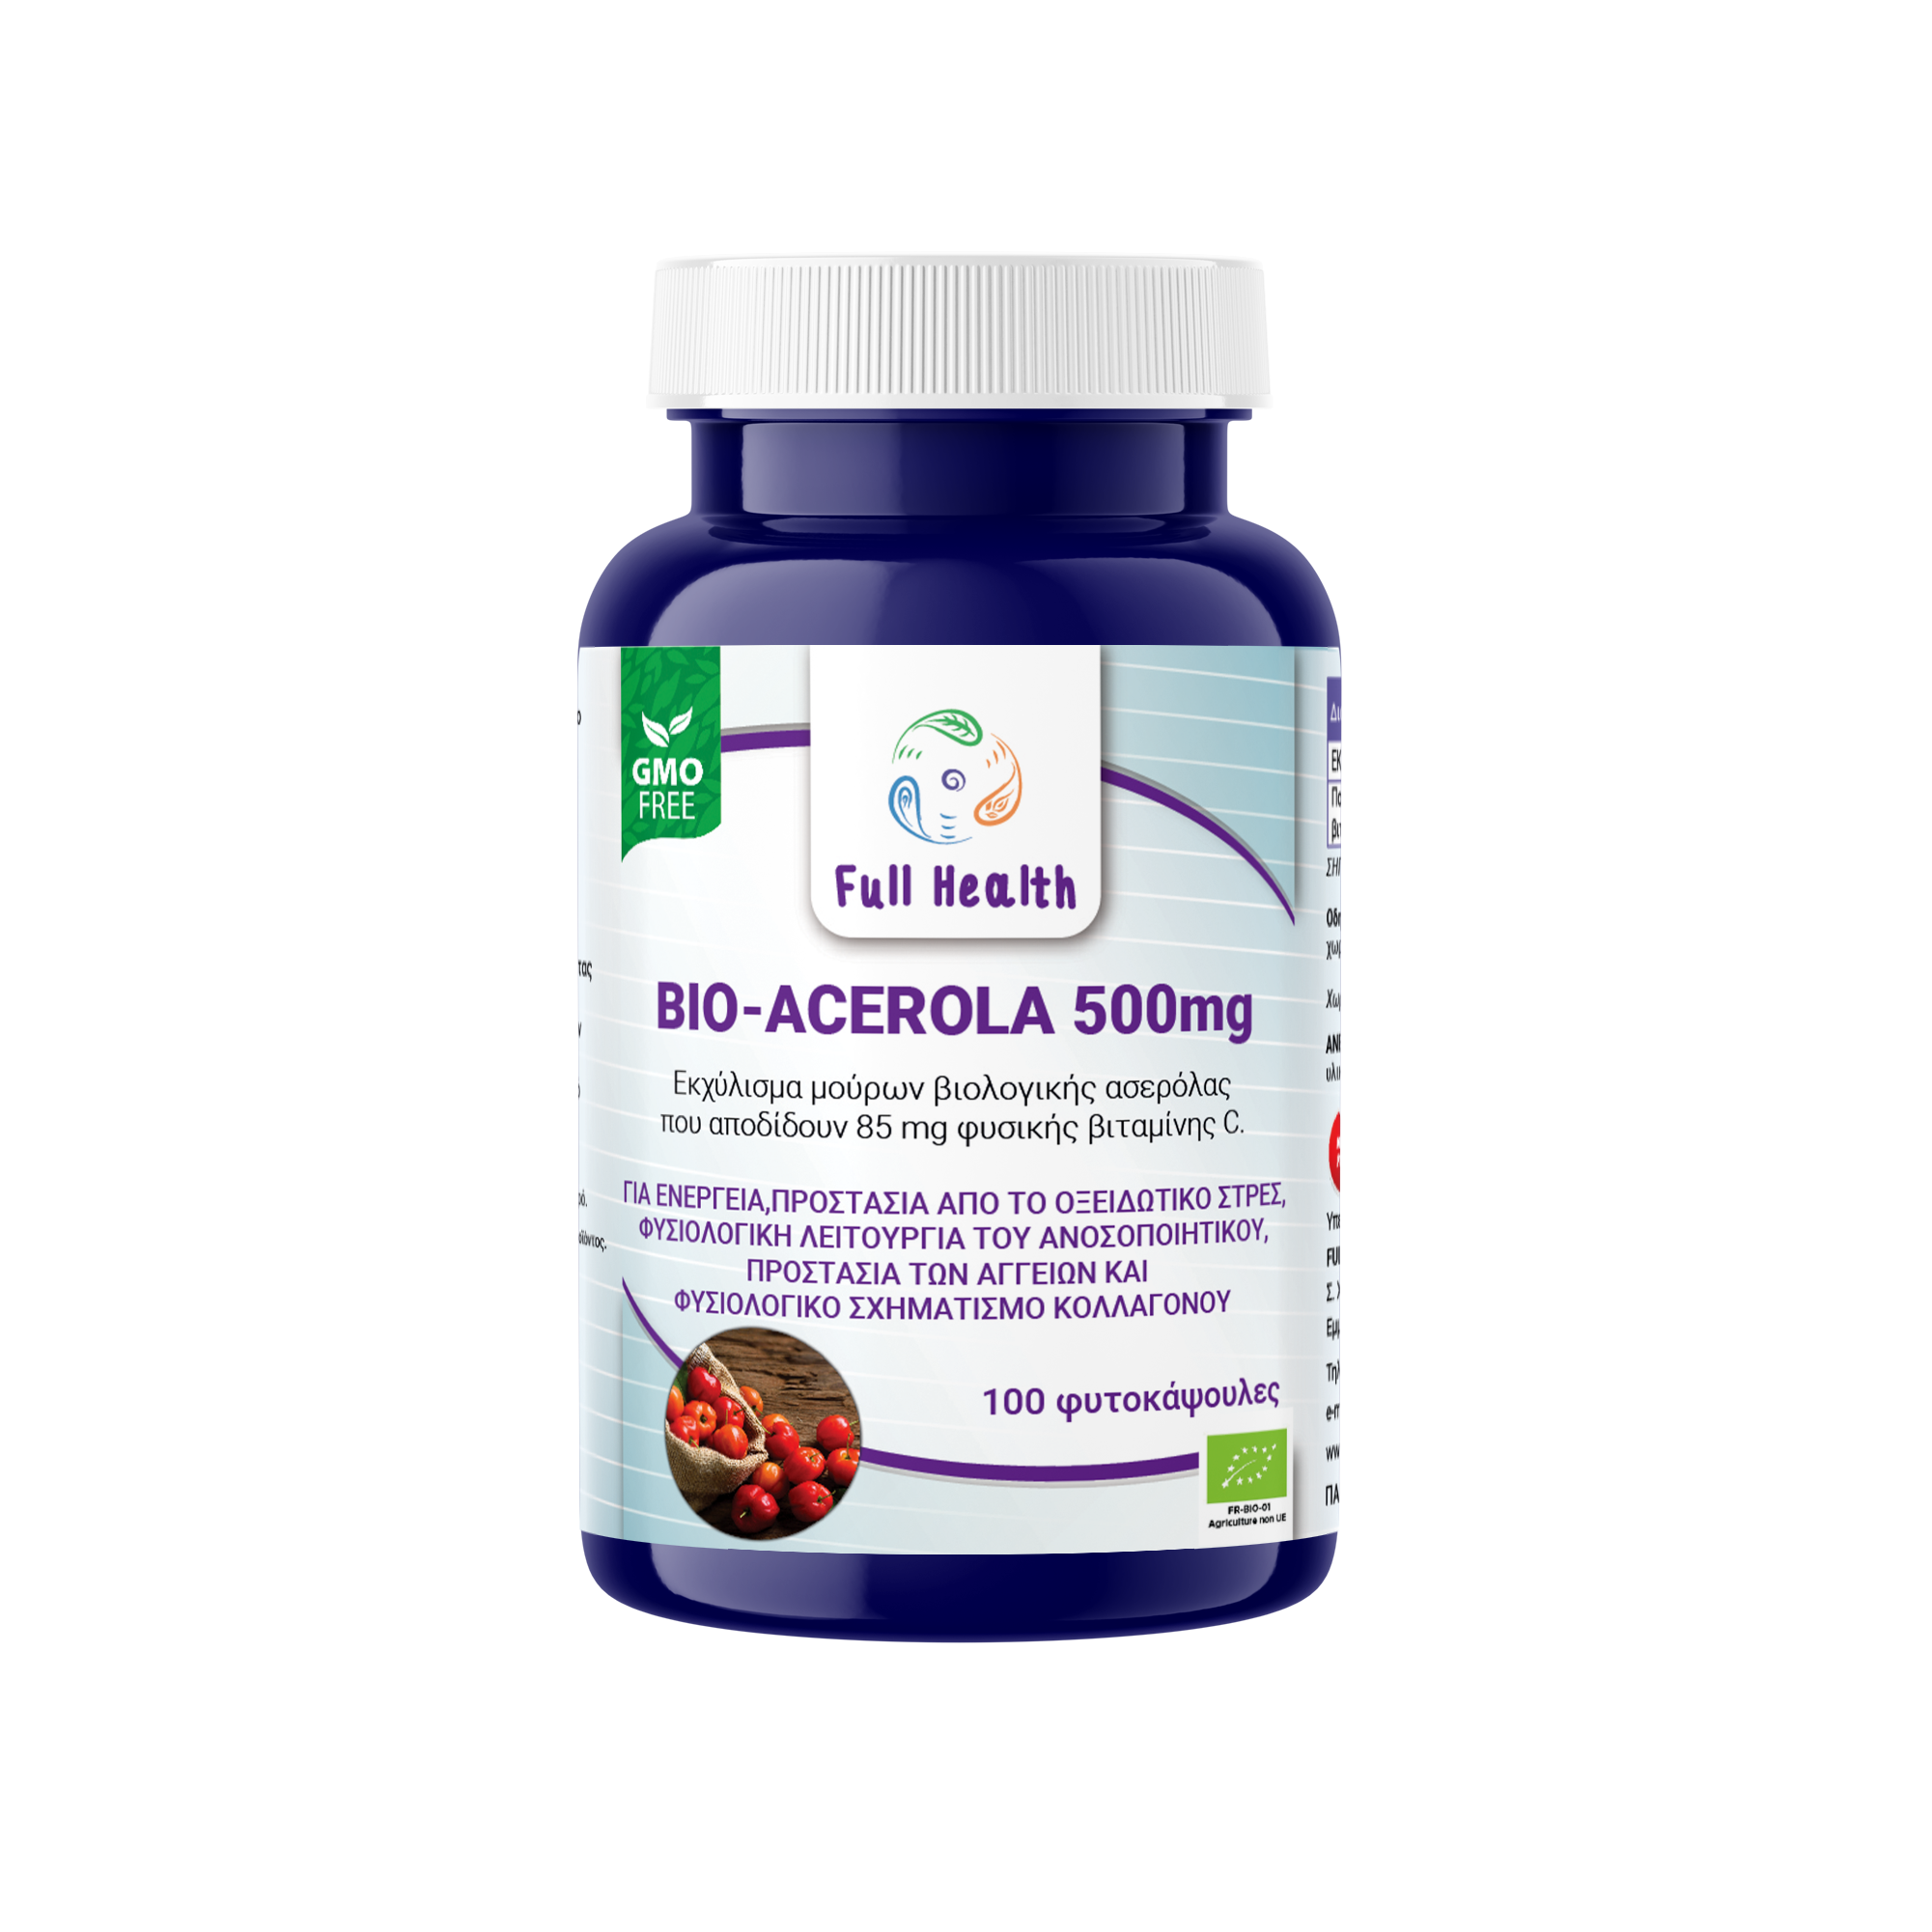 Full Health Acerola ΒIO 500 mg 100 Vcaps (Συμπλήρωμα διατροφής με εκχύλισμα μούρων βιολογικής ασερόλας)